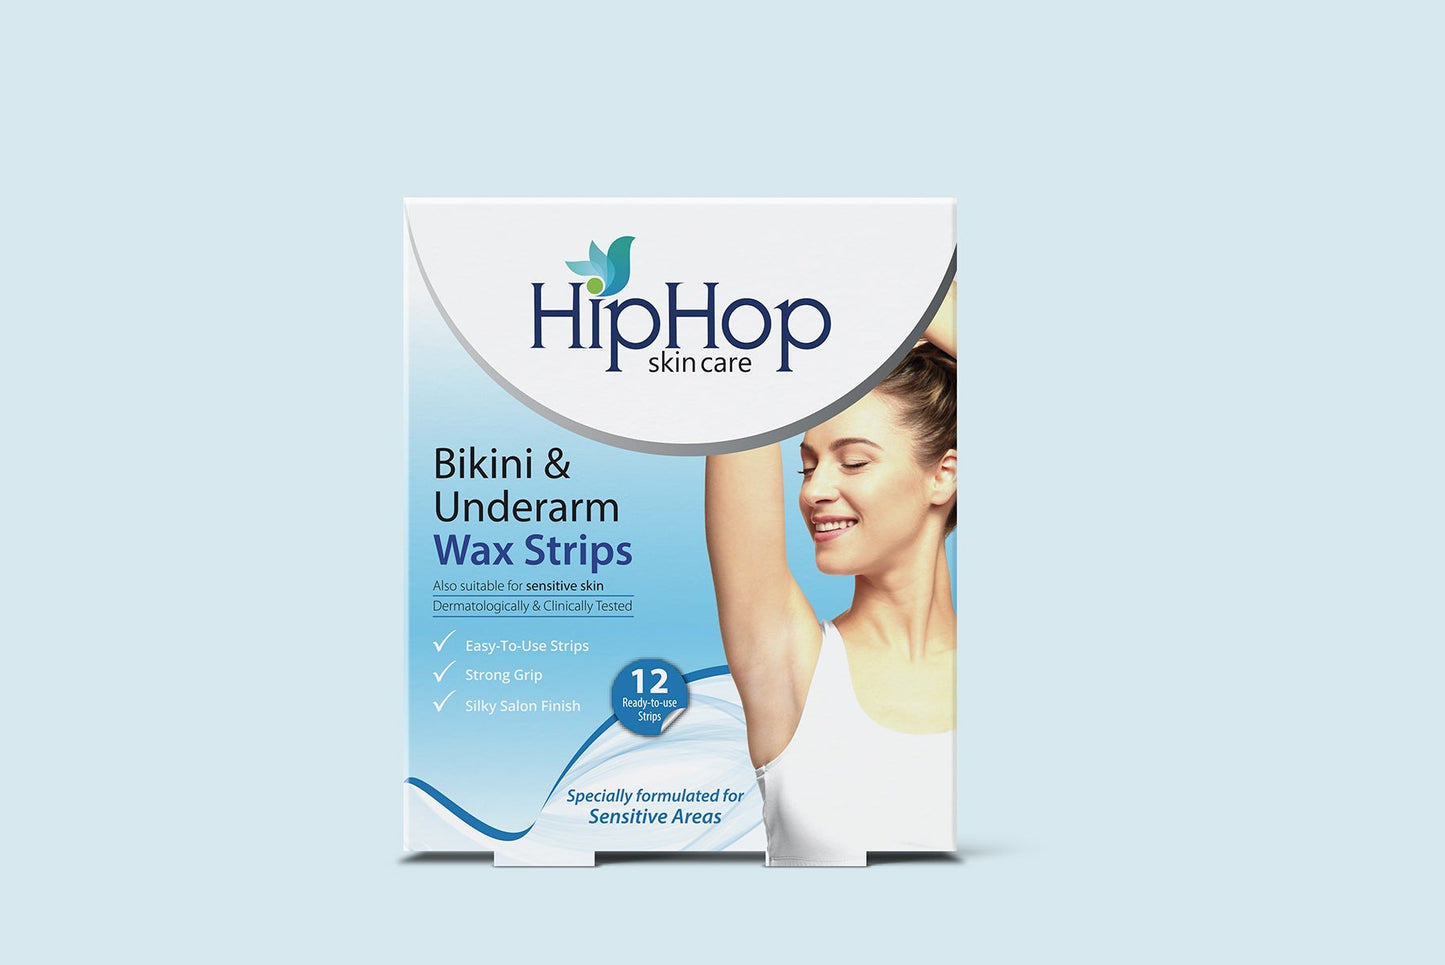 HipHop Bikini & Underarm Wax Strips (Argan Oil, 12 Strips) + Instant Makeup Remover Wipes (Micellar water, 30 Wipes)